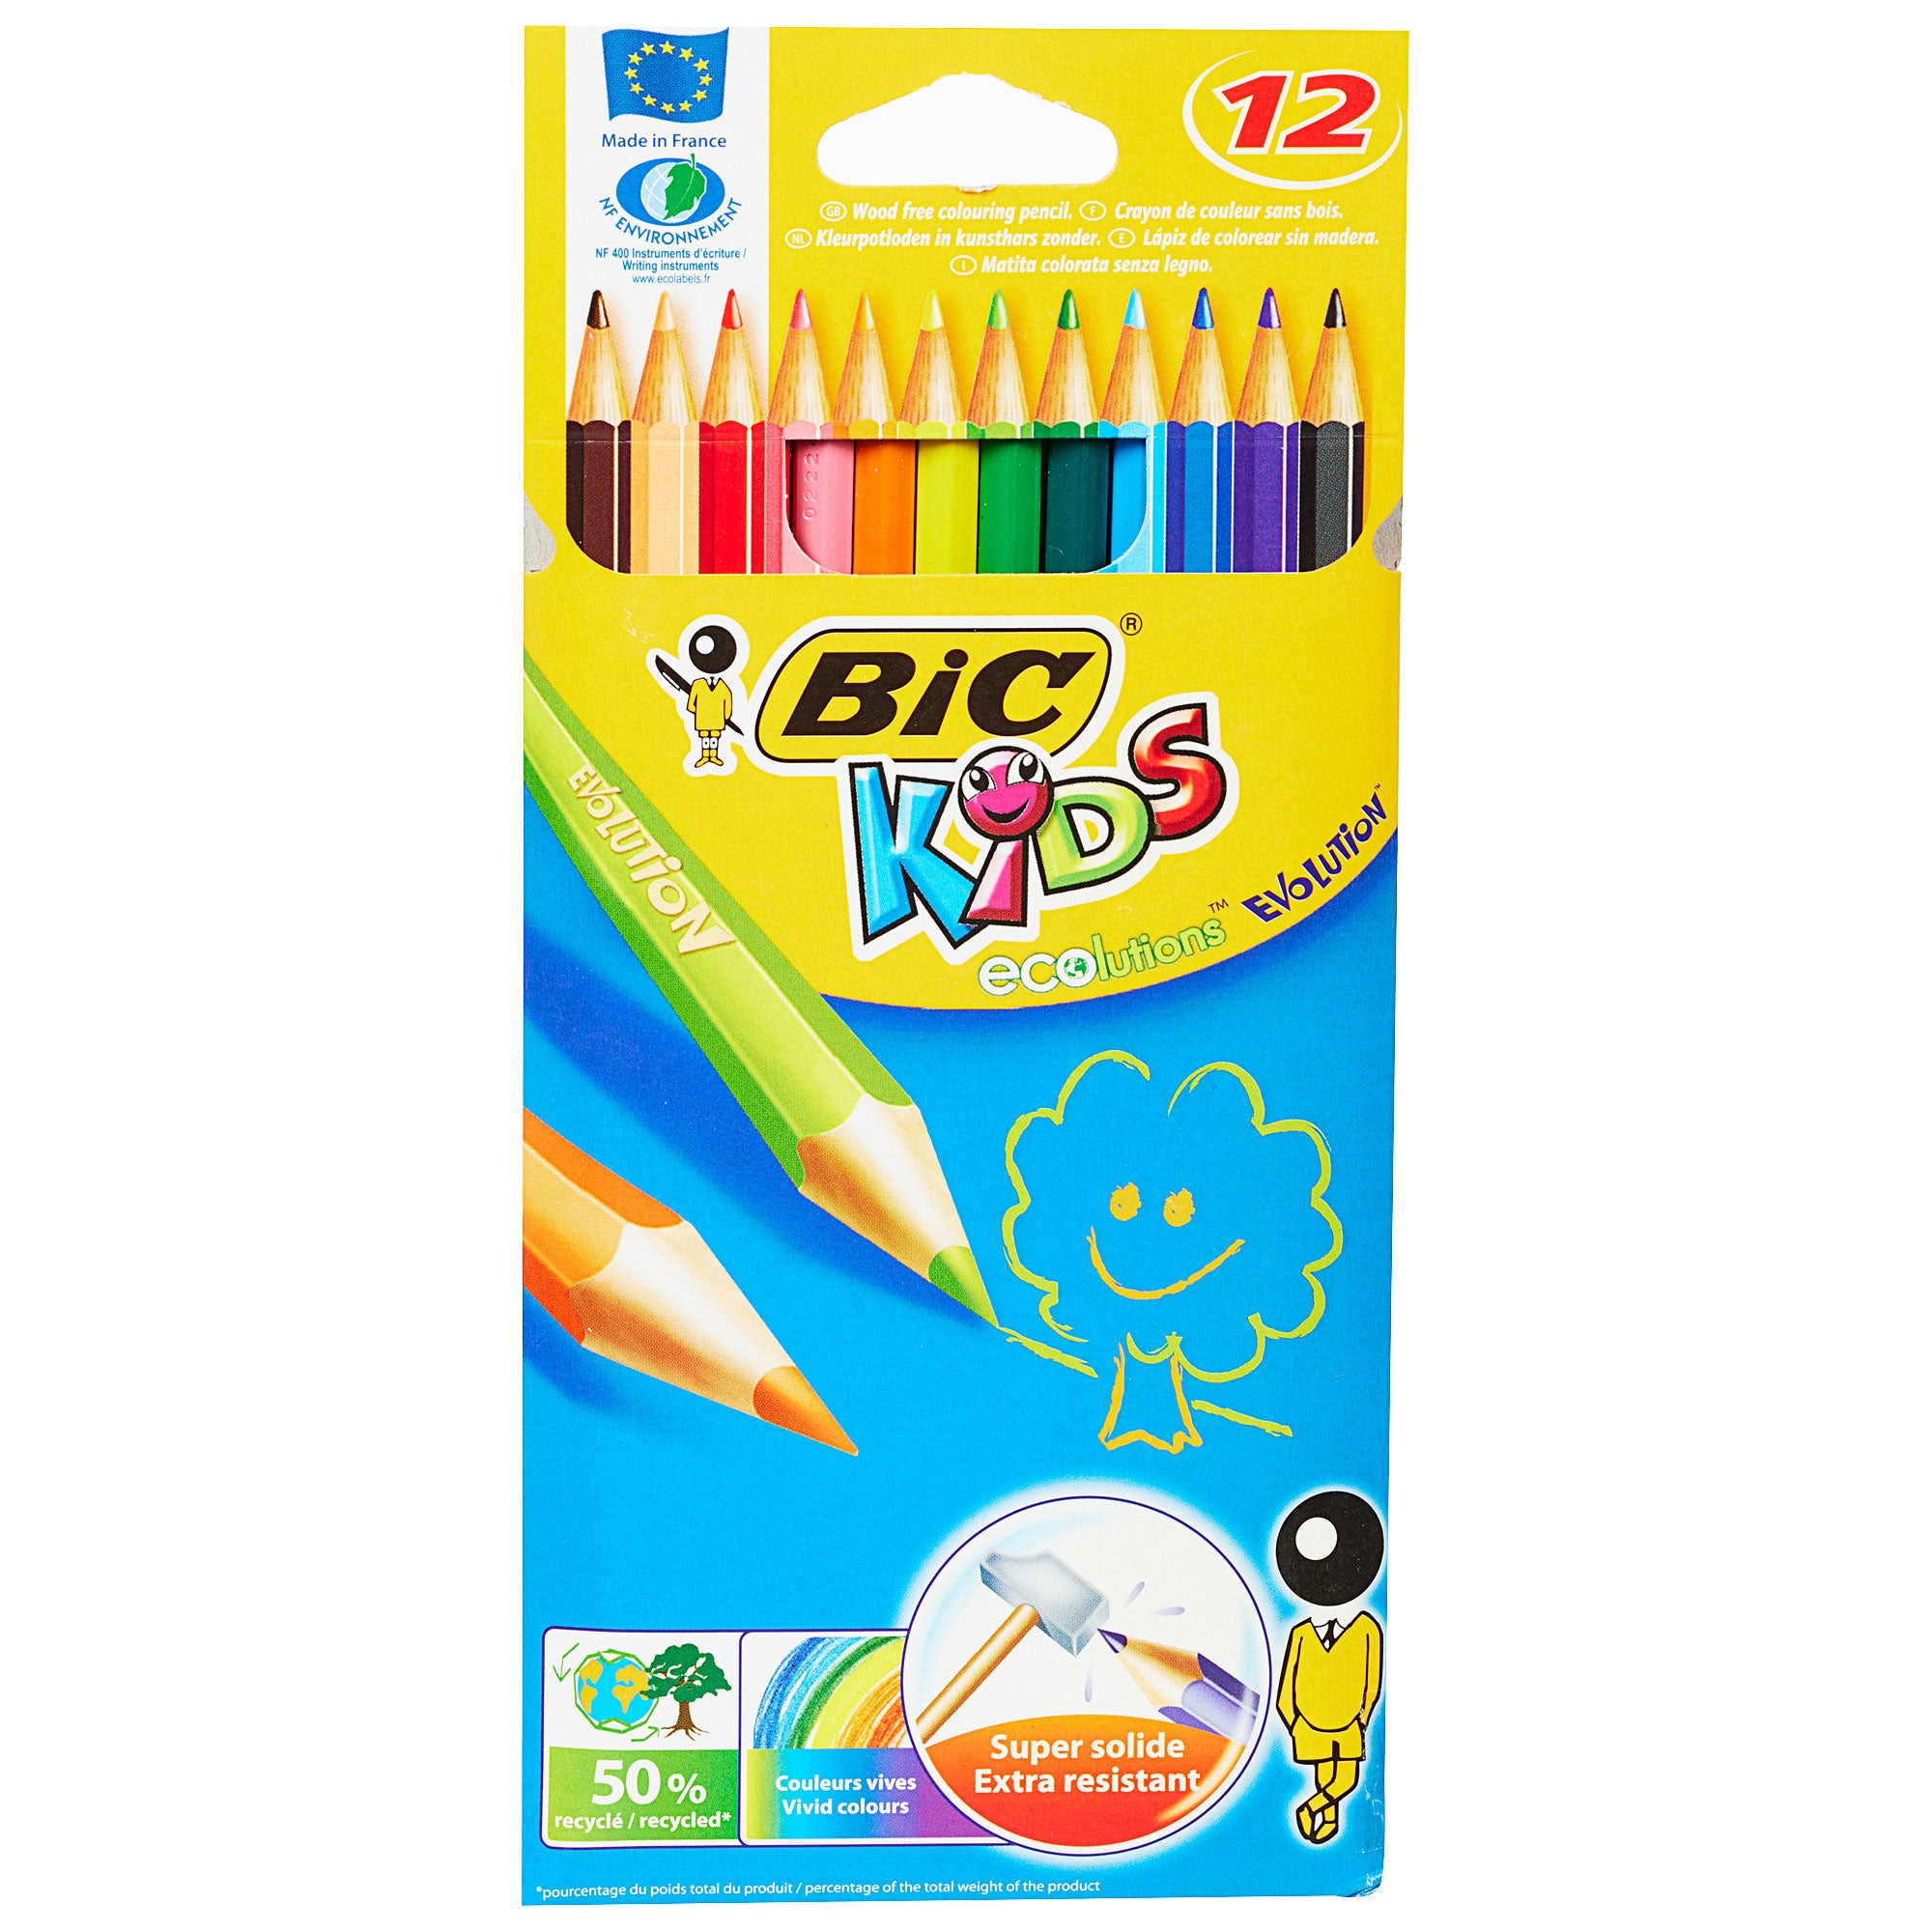 Save on Kids, Pencils